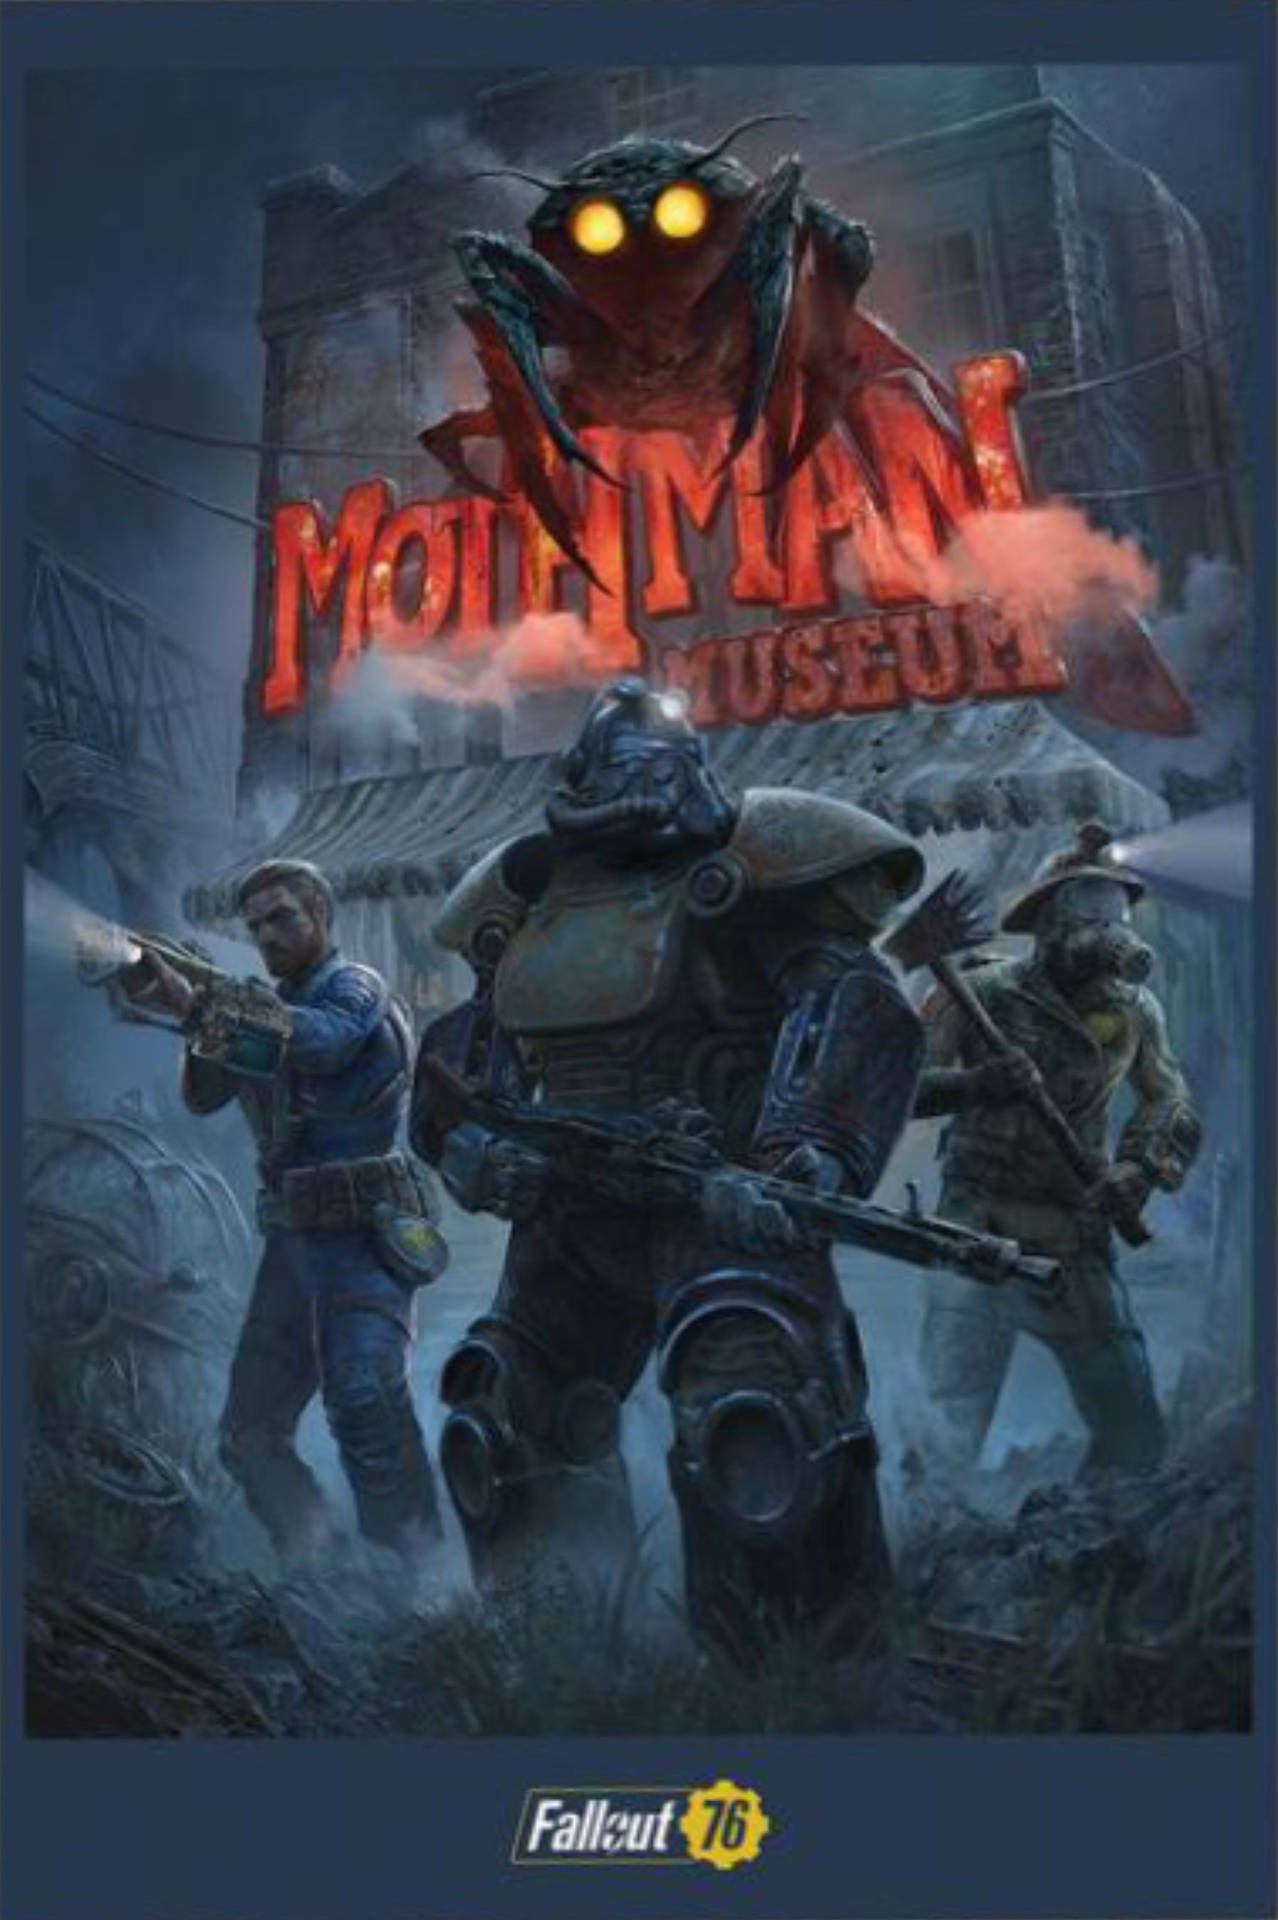 Fallout 76 Mothman Museum Poster